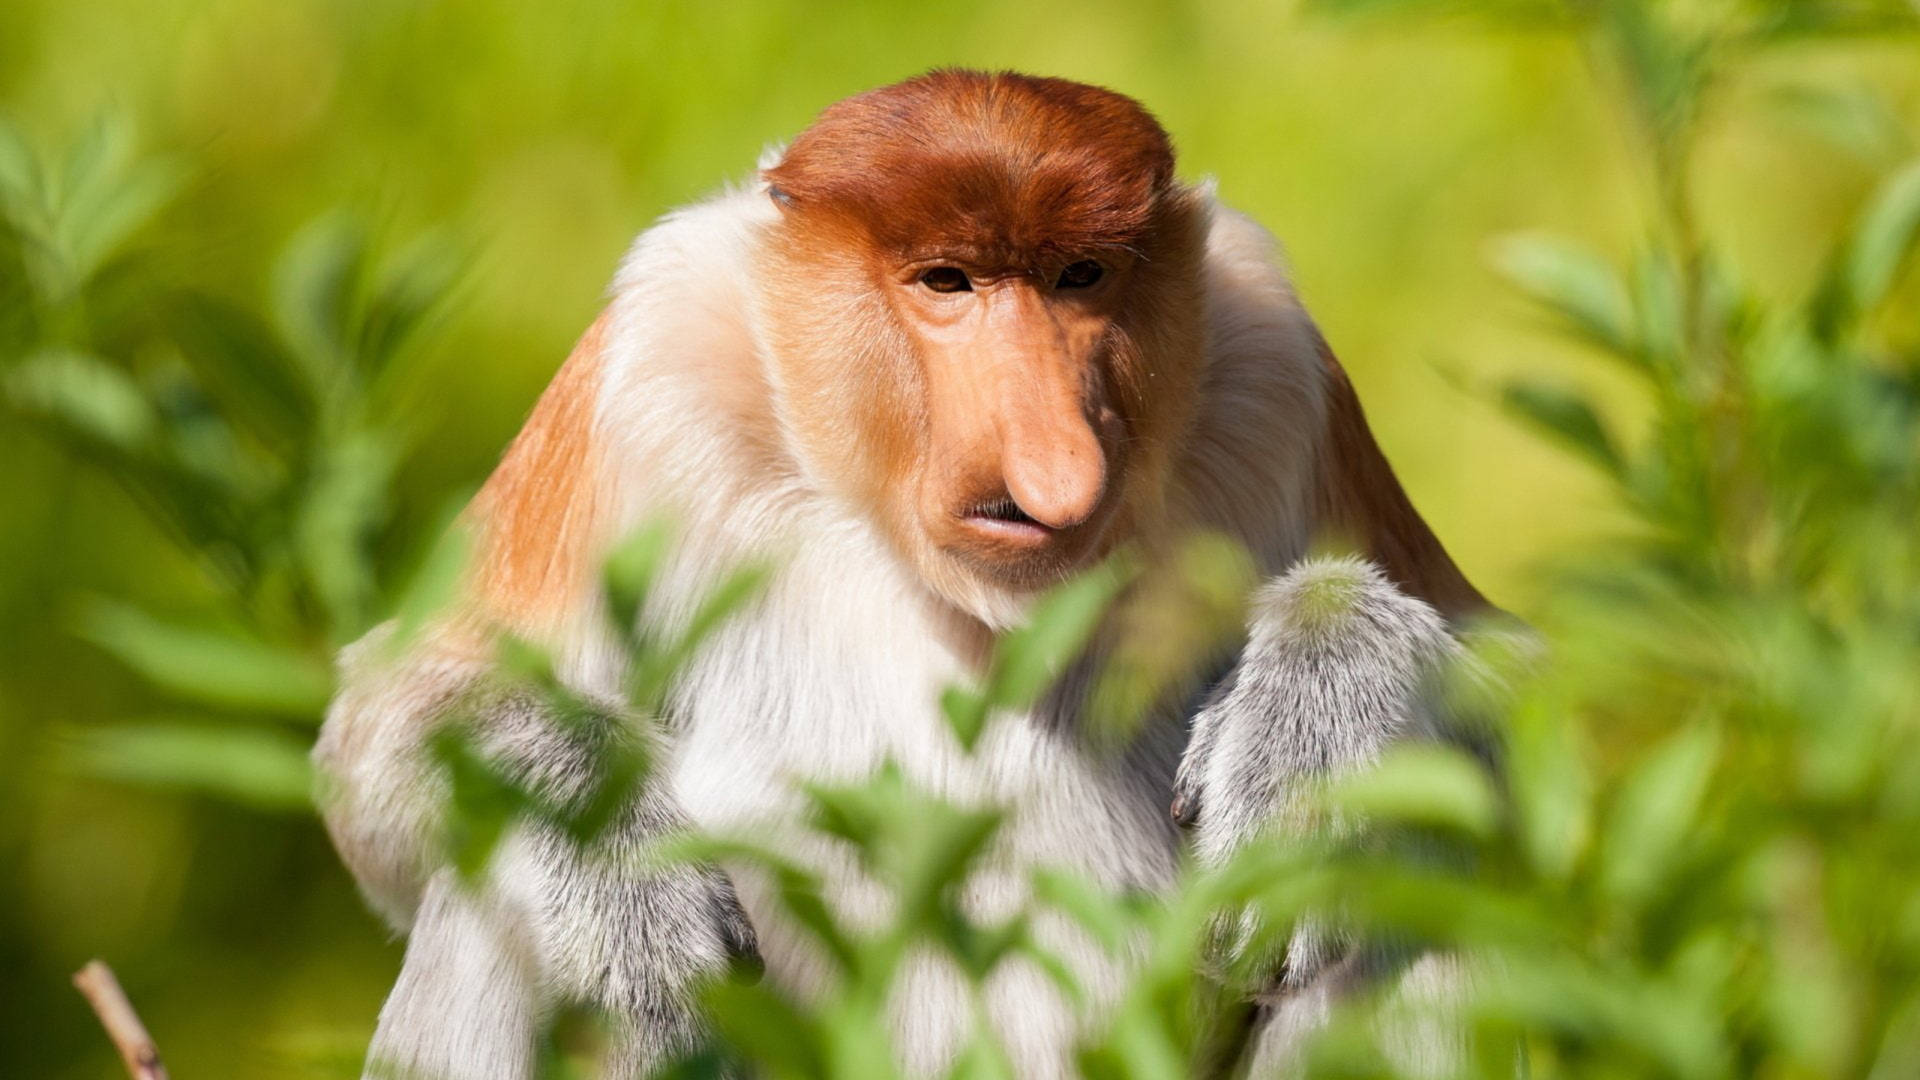 Majestic Proboscis Monkey In Its Natural Habitat